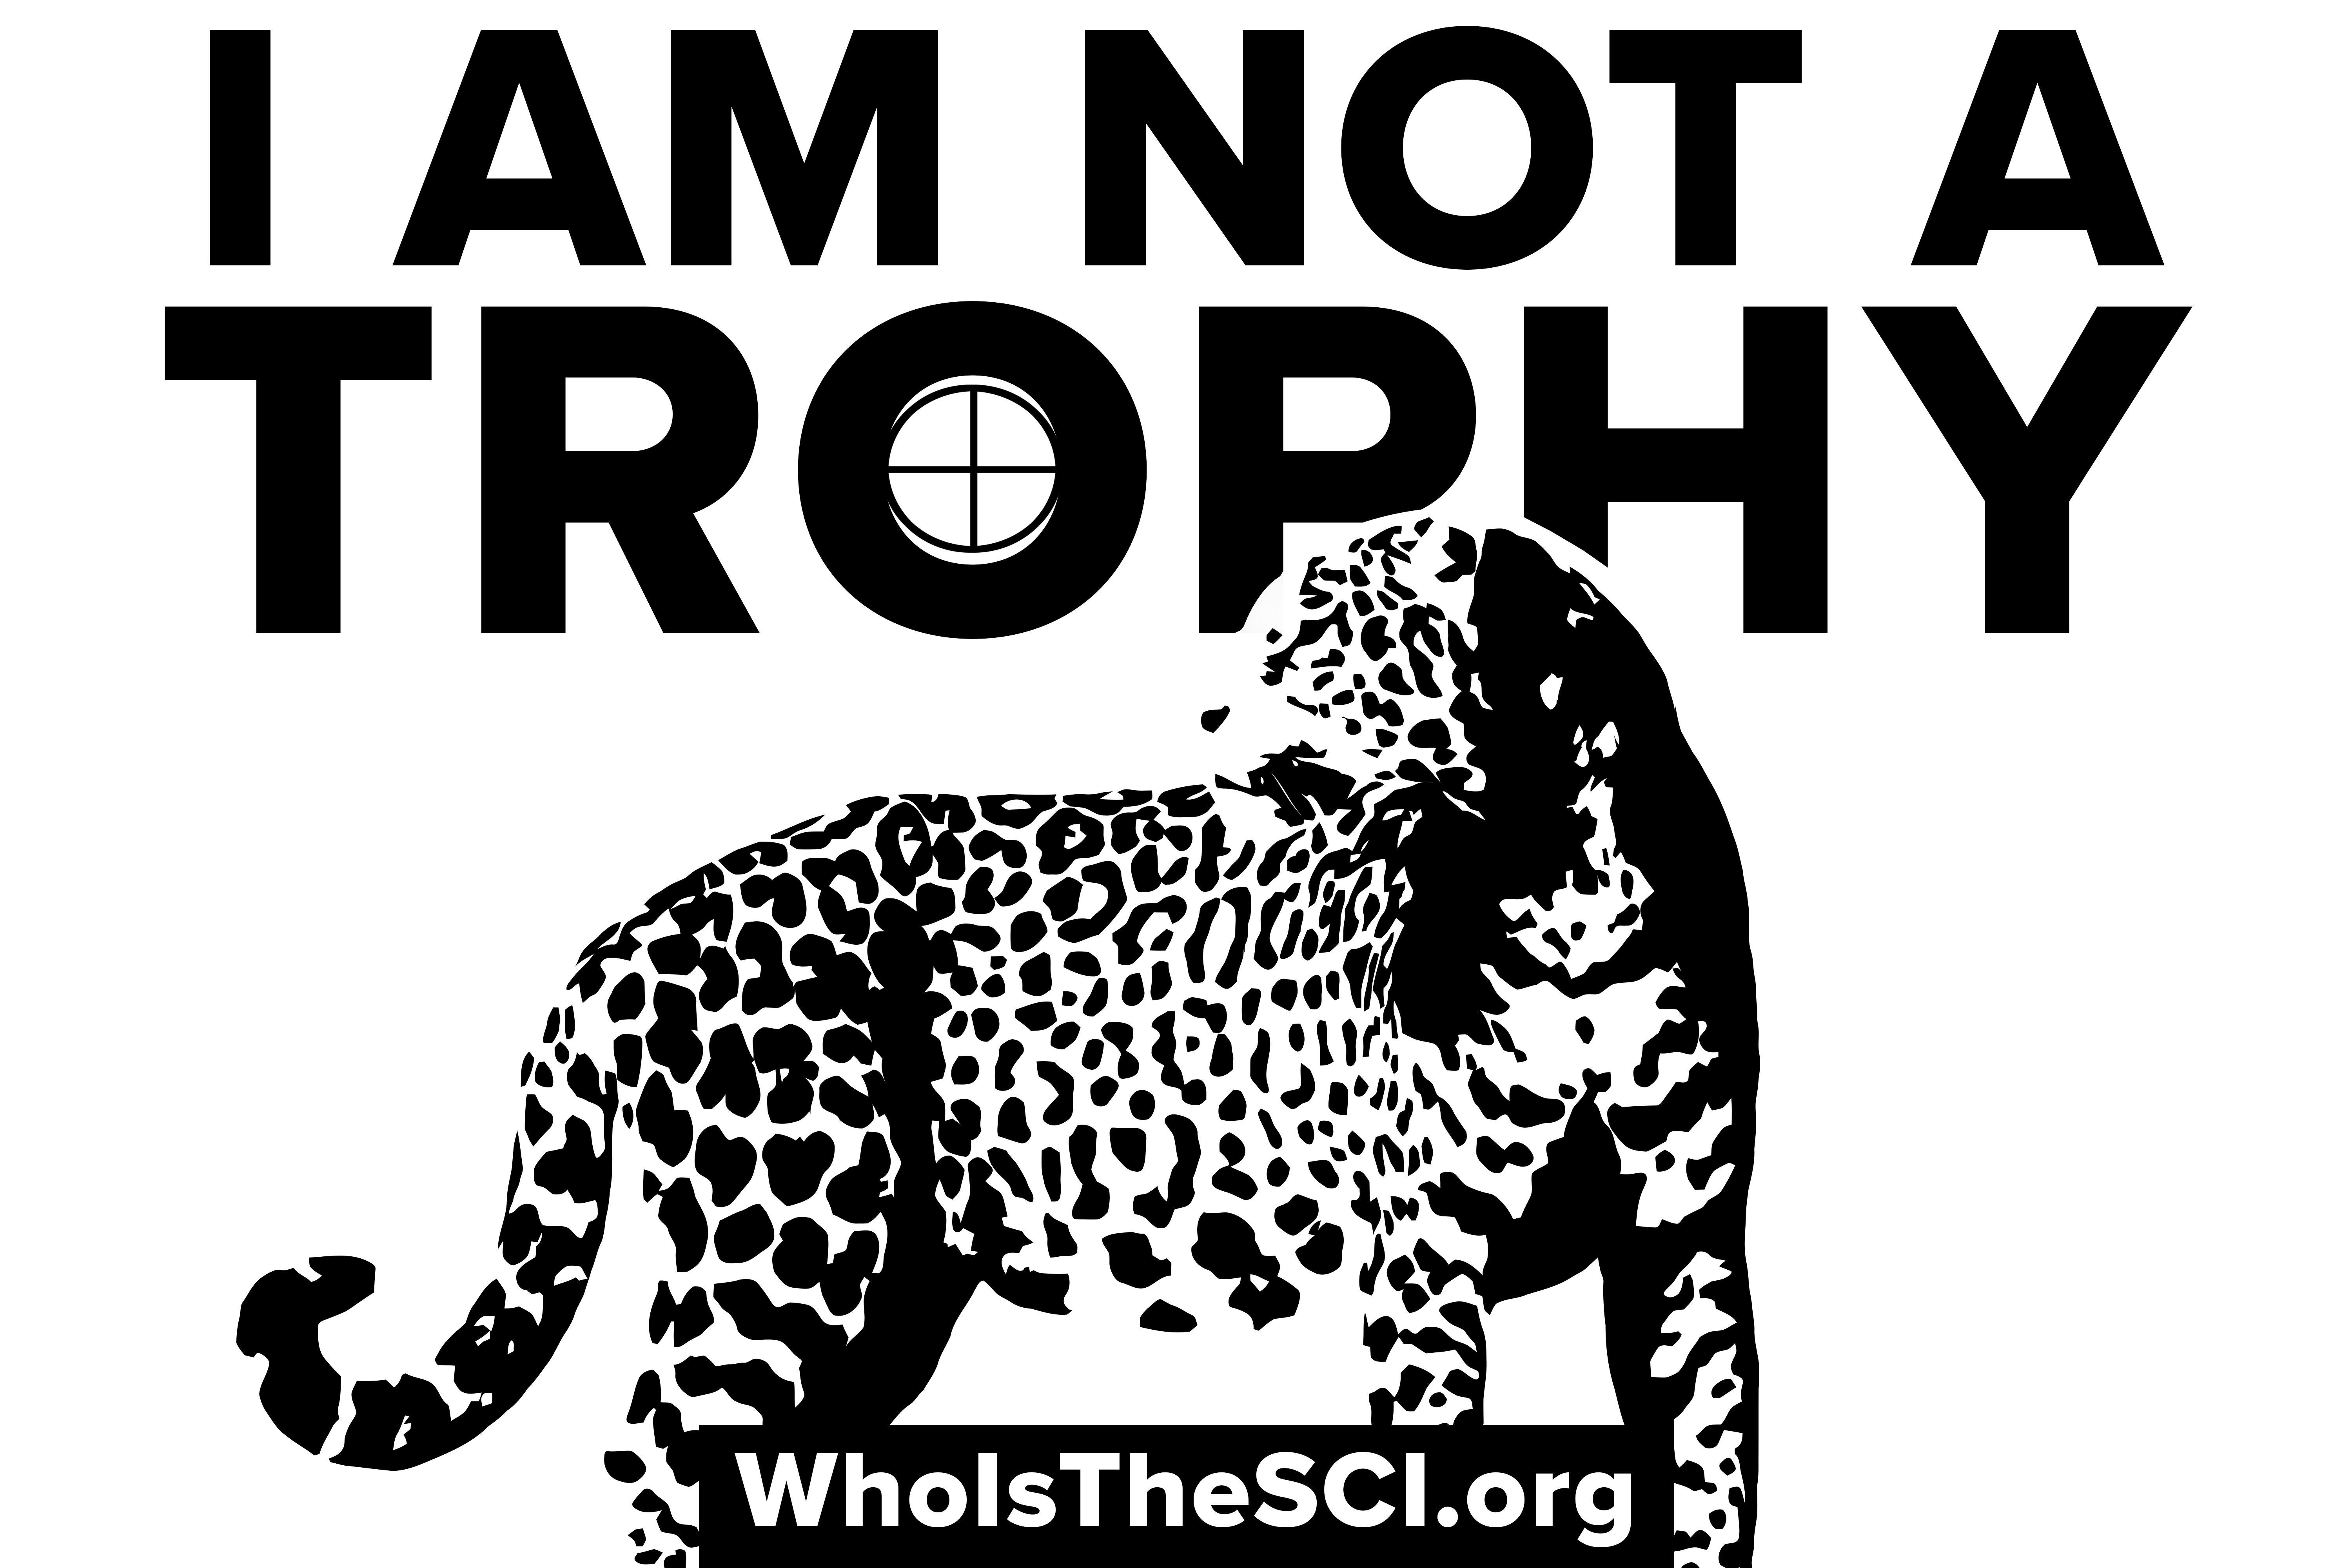 I am not a trophy